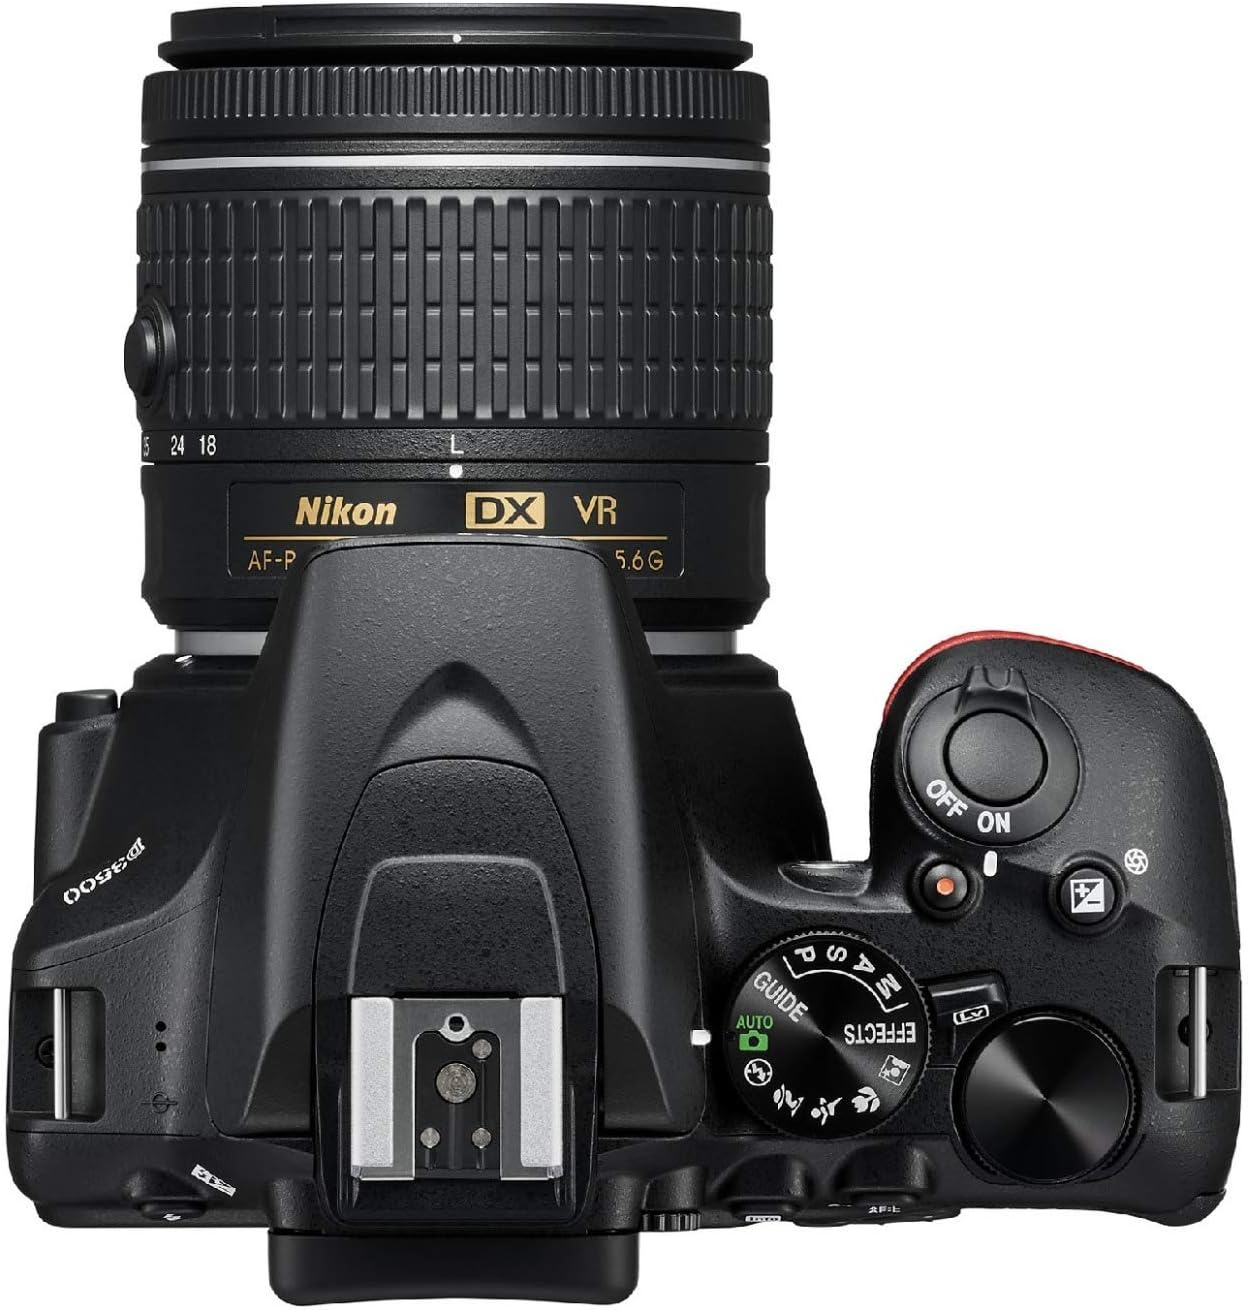 Nikon D3500 DSLR Camera with 18-55mm Lens - Black